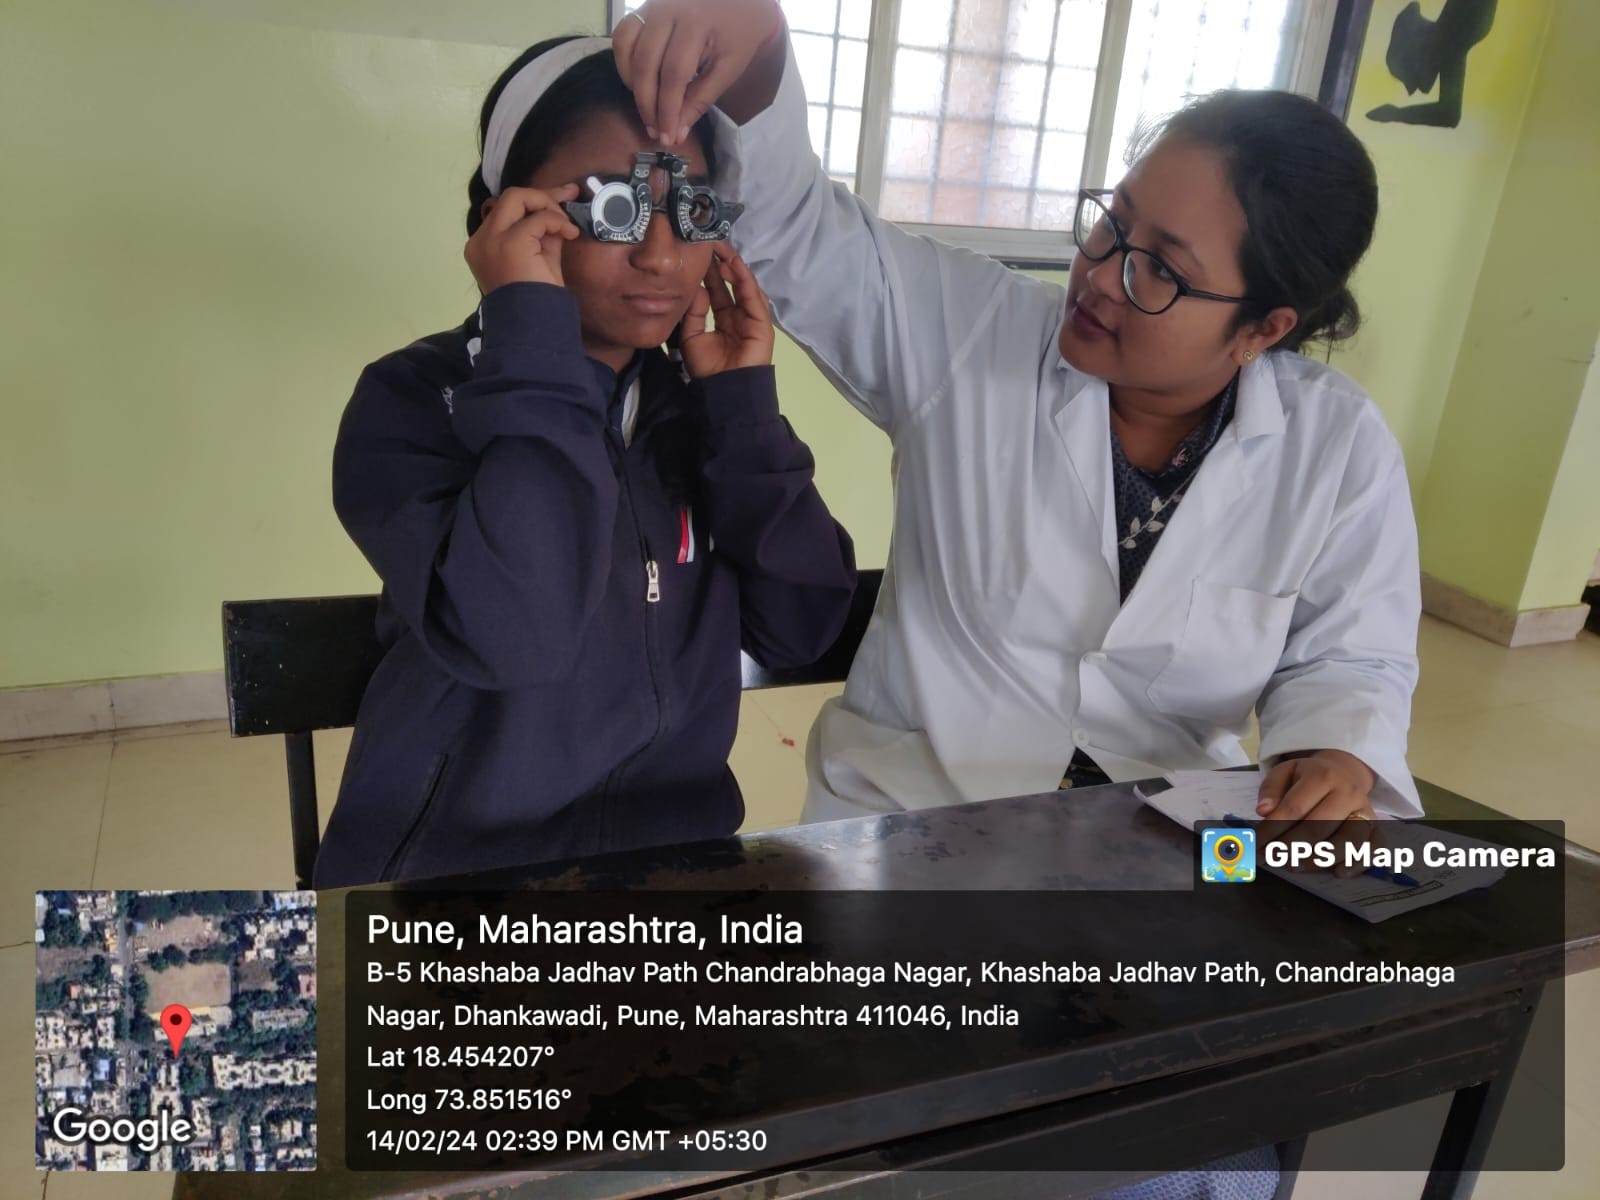 Dr. Y G Shinde Vidyaniketan School eye screening camp in collaboration with Community Eye Care Foundation and BV(DU), School of Optometry, Pune